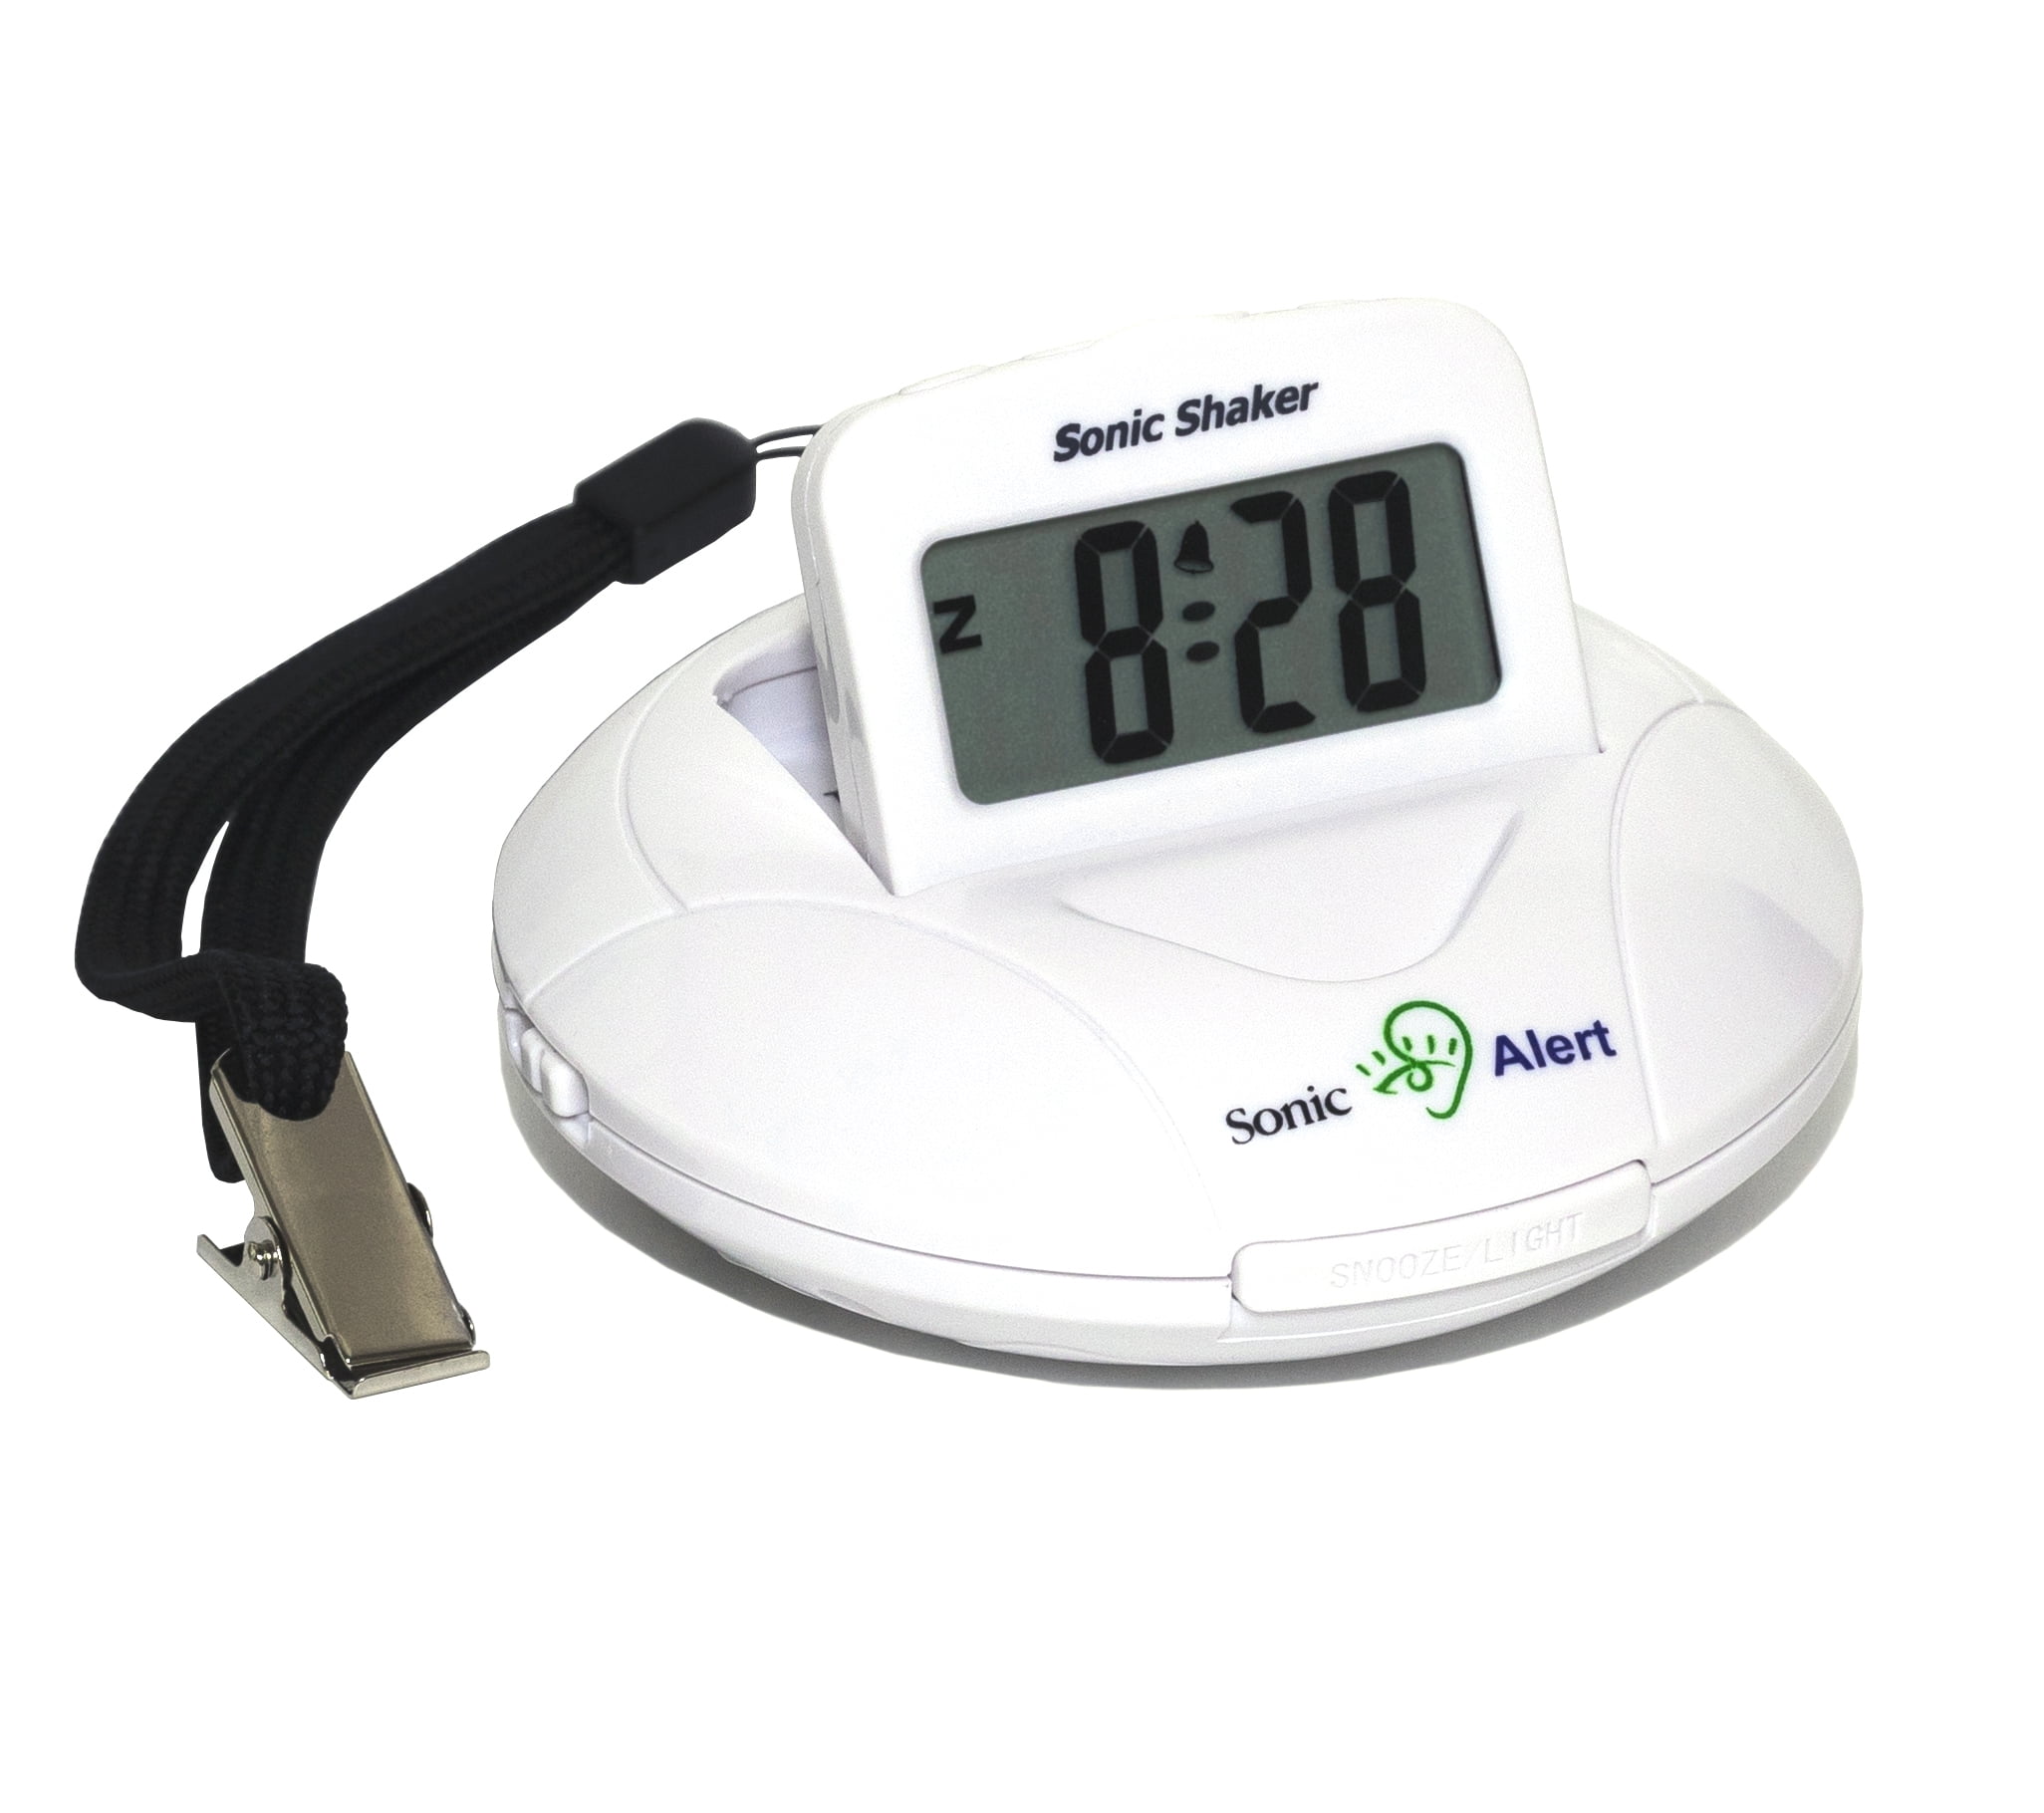 Yixx V9 Body Temperature Monitor Thermometer Vibration Alarm Wristband  Smart Bracelet - Walmart.com